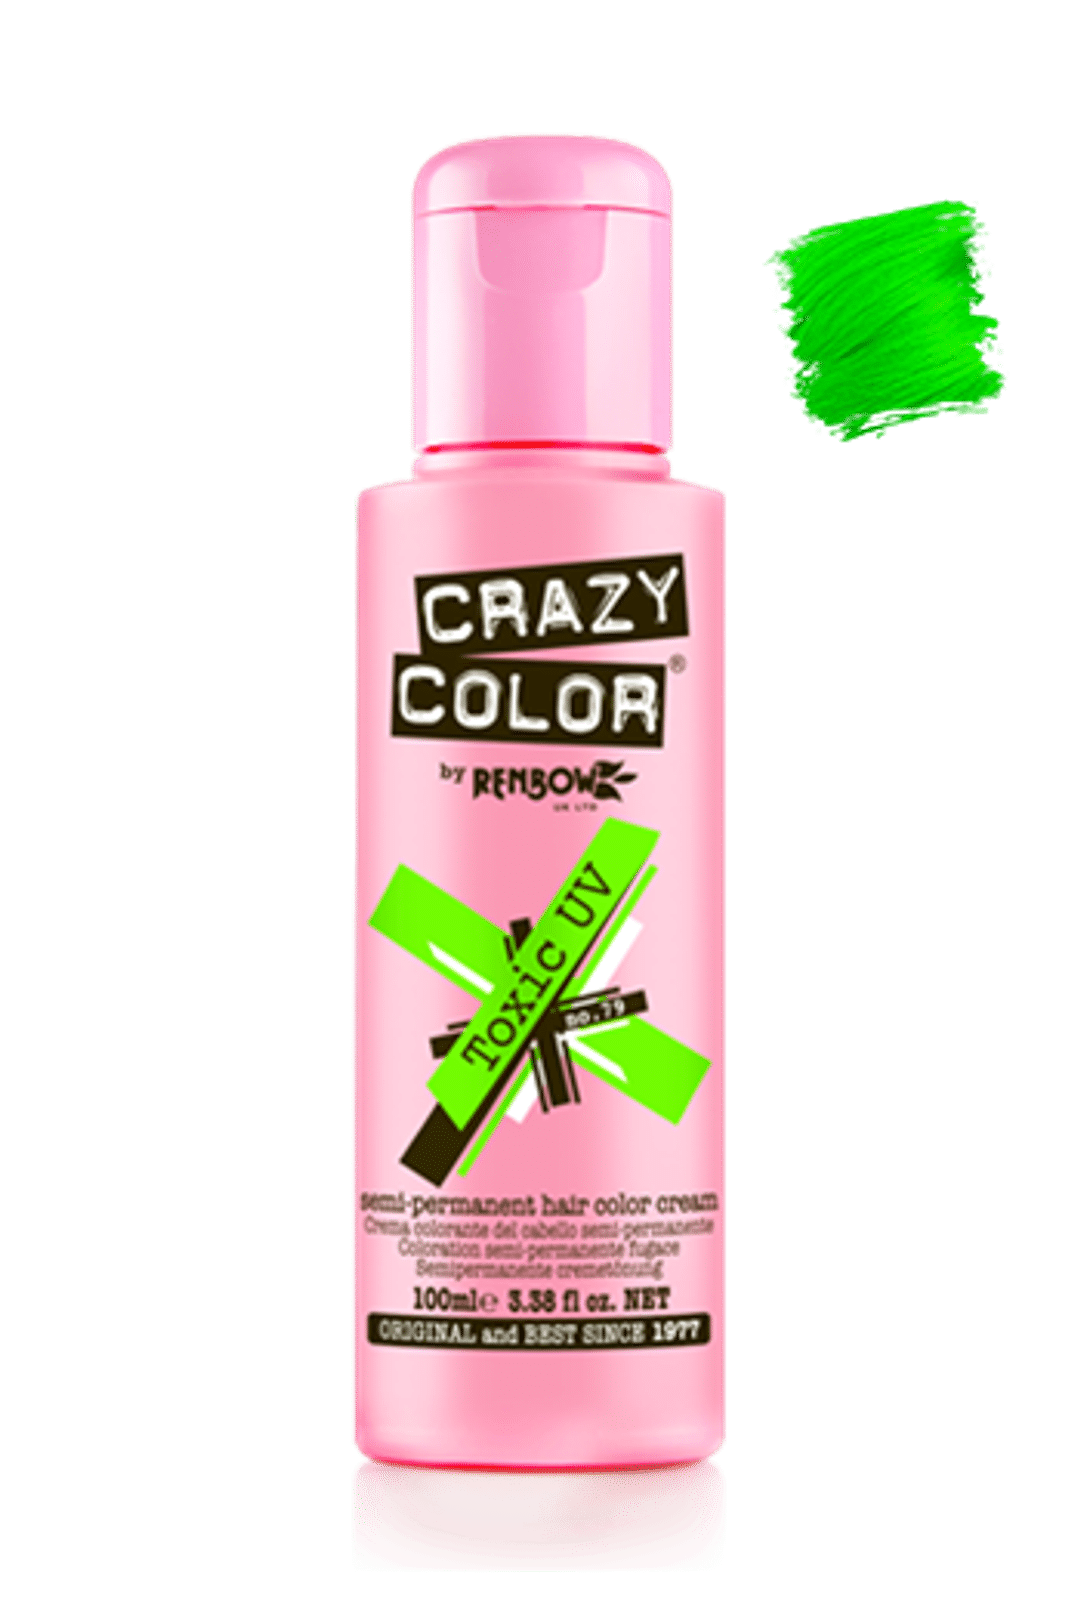 Crazy Color Semi Permanent Hair Color Cream - Toxic Uv